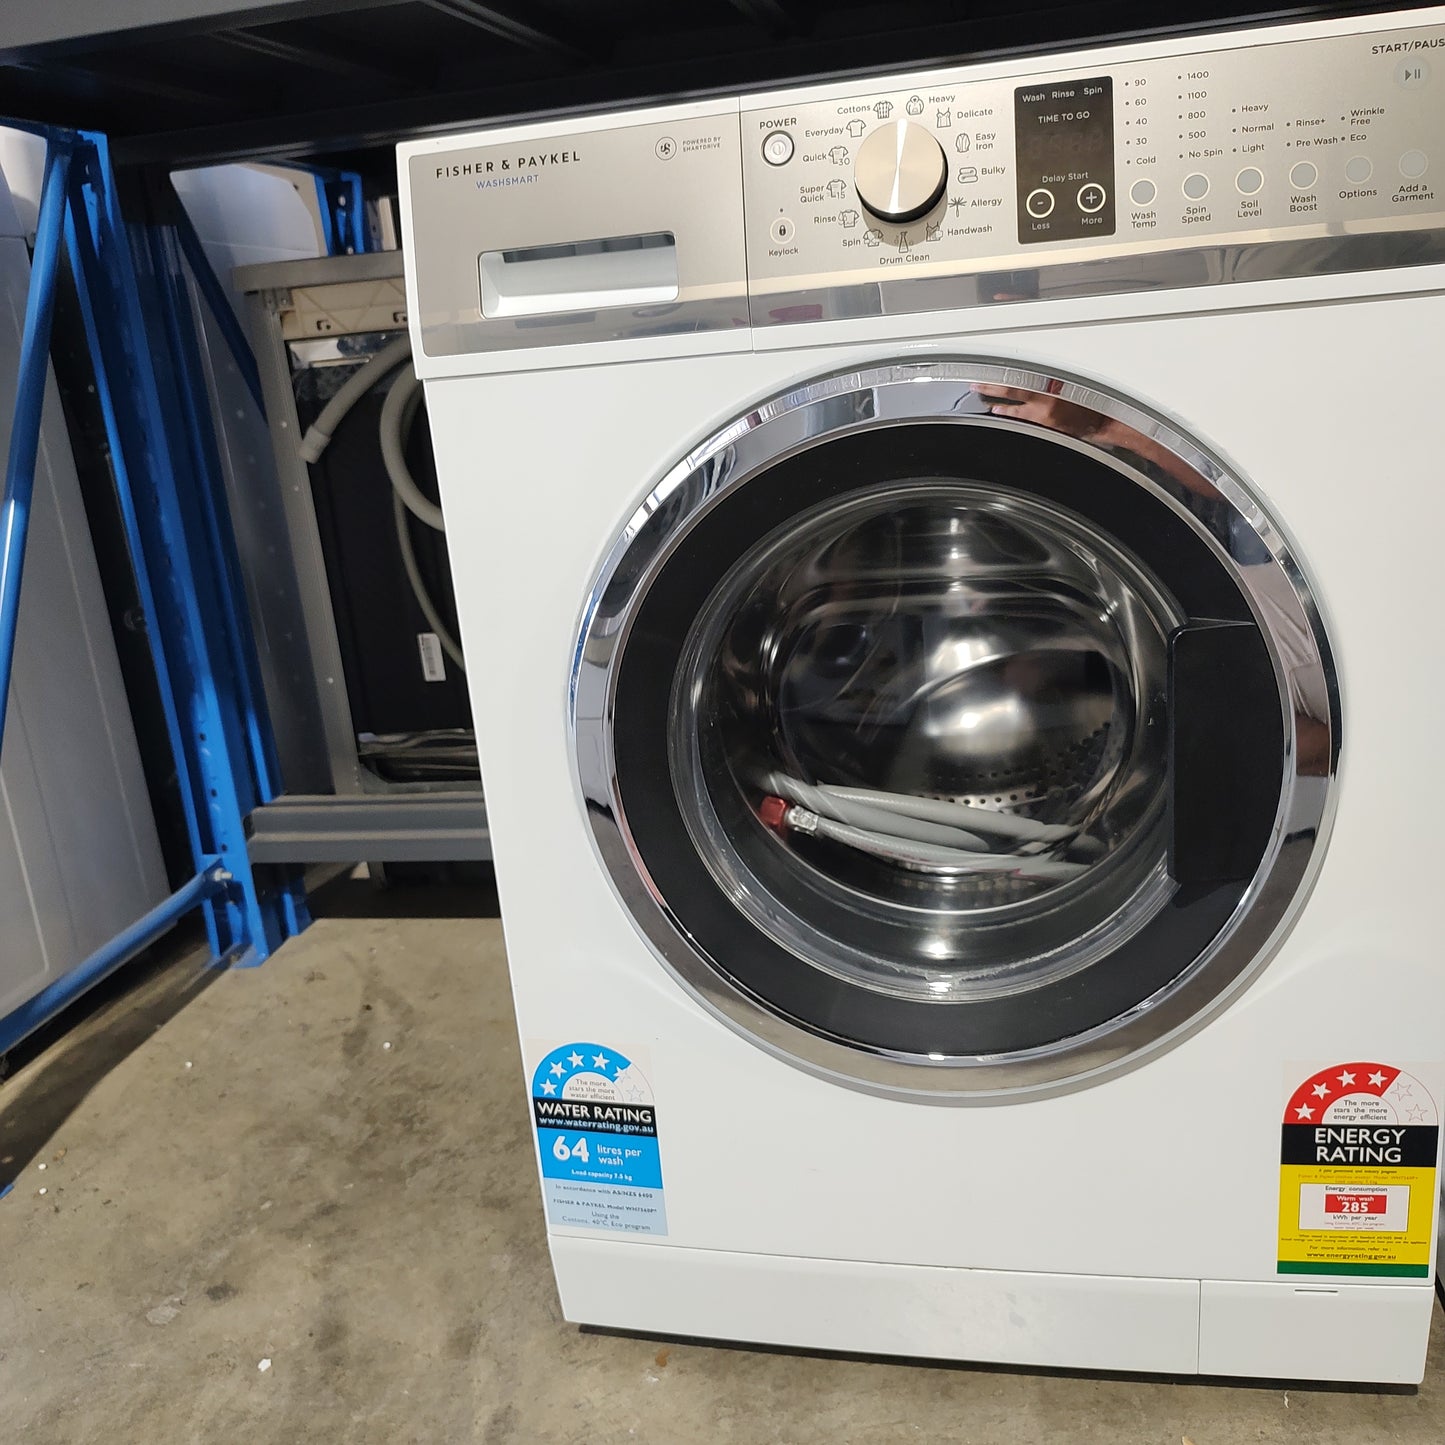 Fisher & Paykel 7.5kg WashSmart Front Load Washing Machine WH7560P2